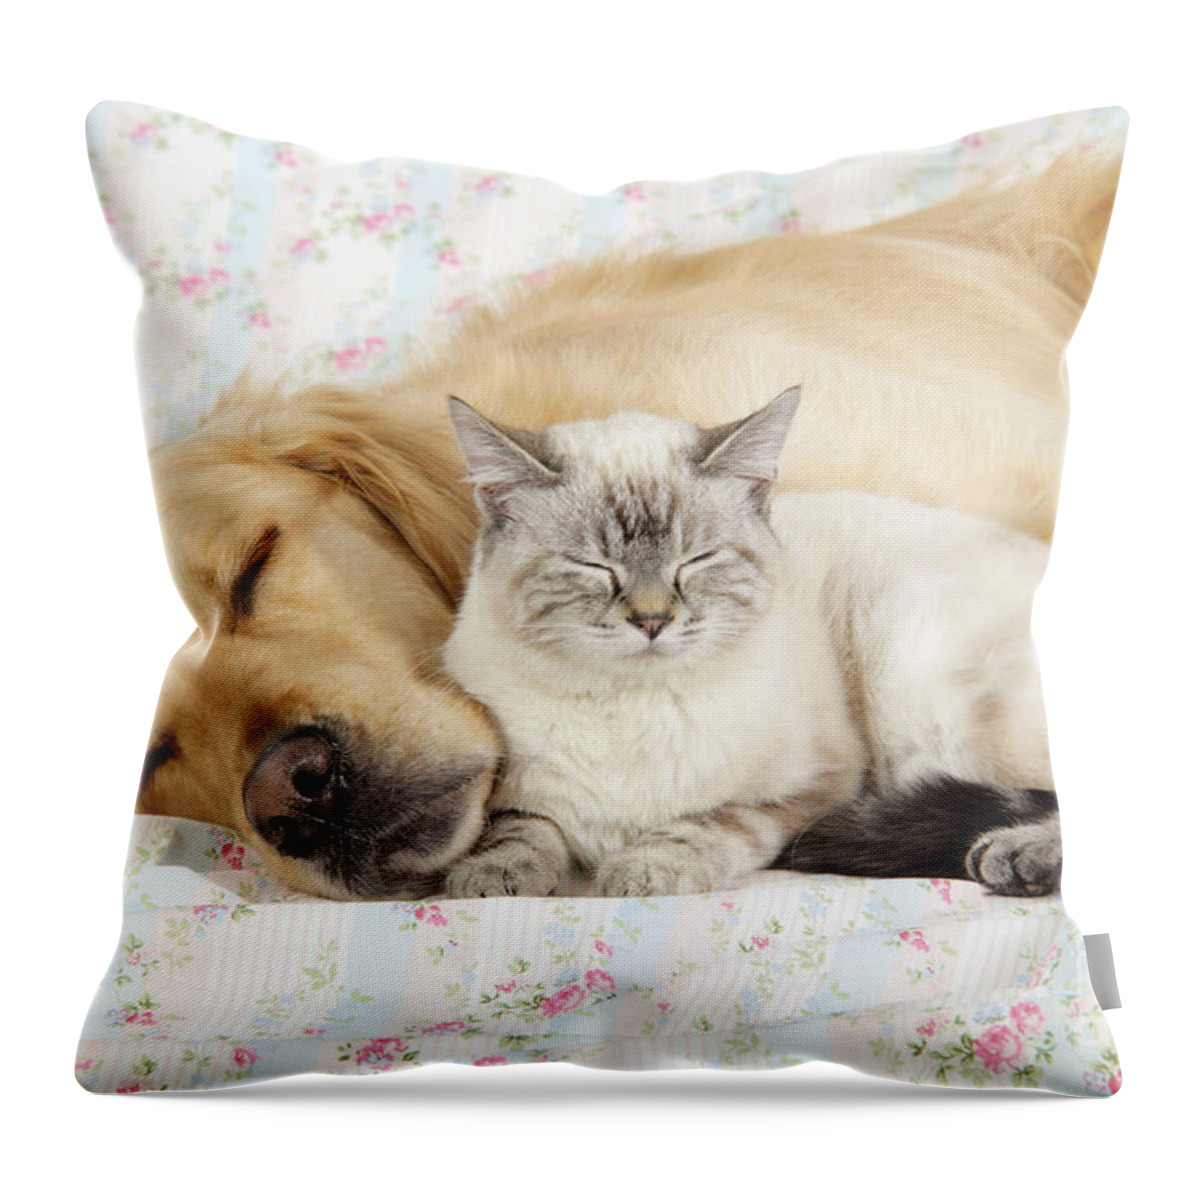 Dog Throw Pillow featuring the photograph Golden Retriever And Cat by John Daniels